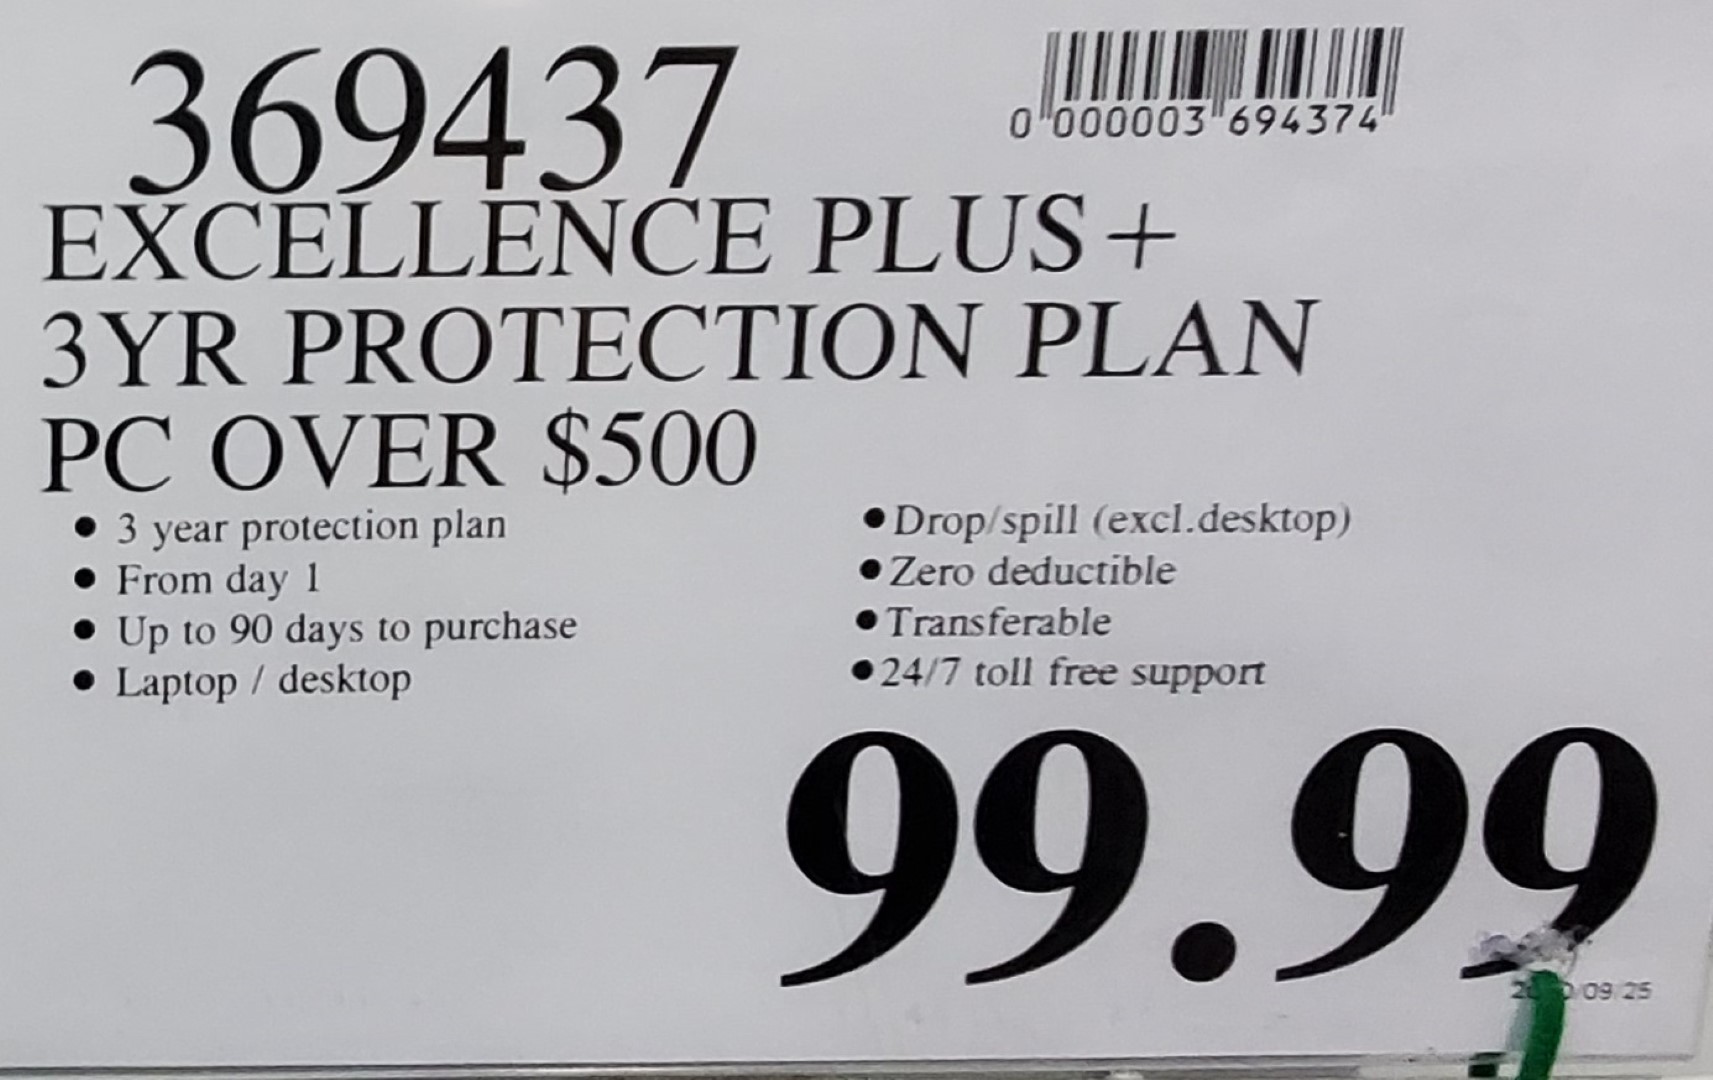 protection plan